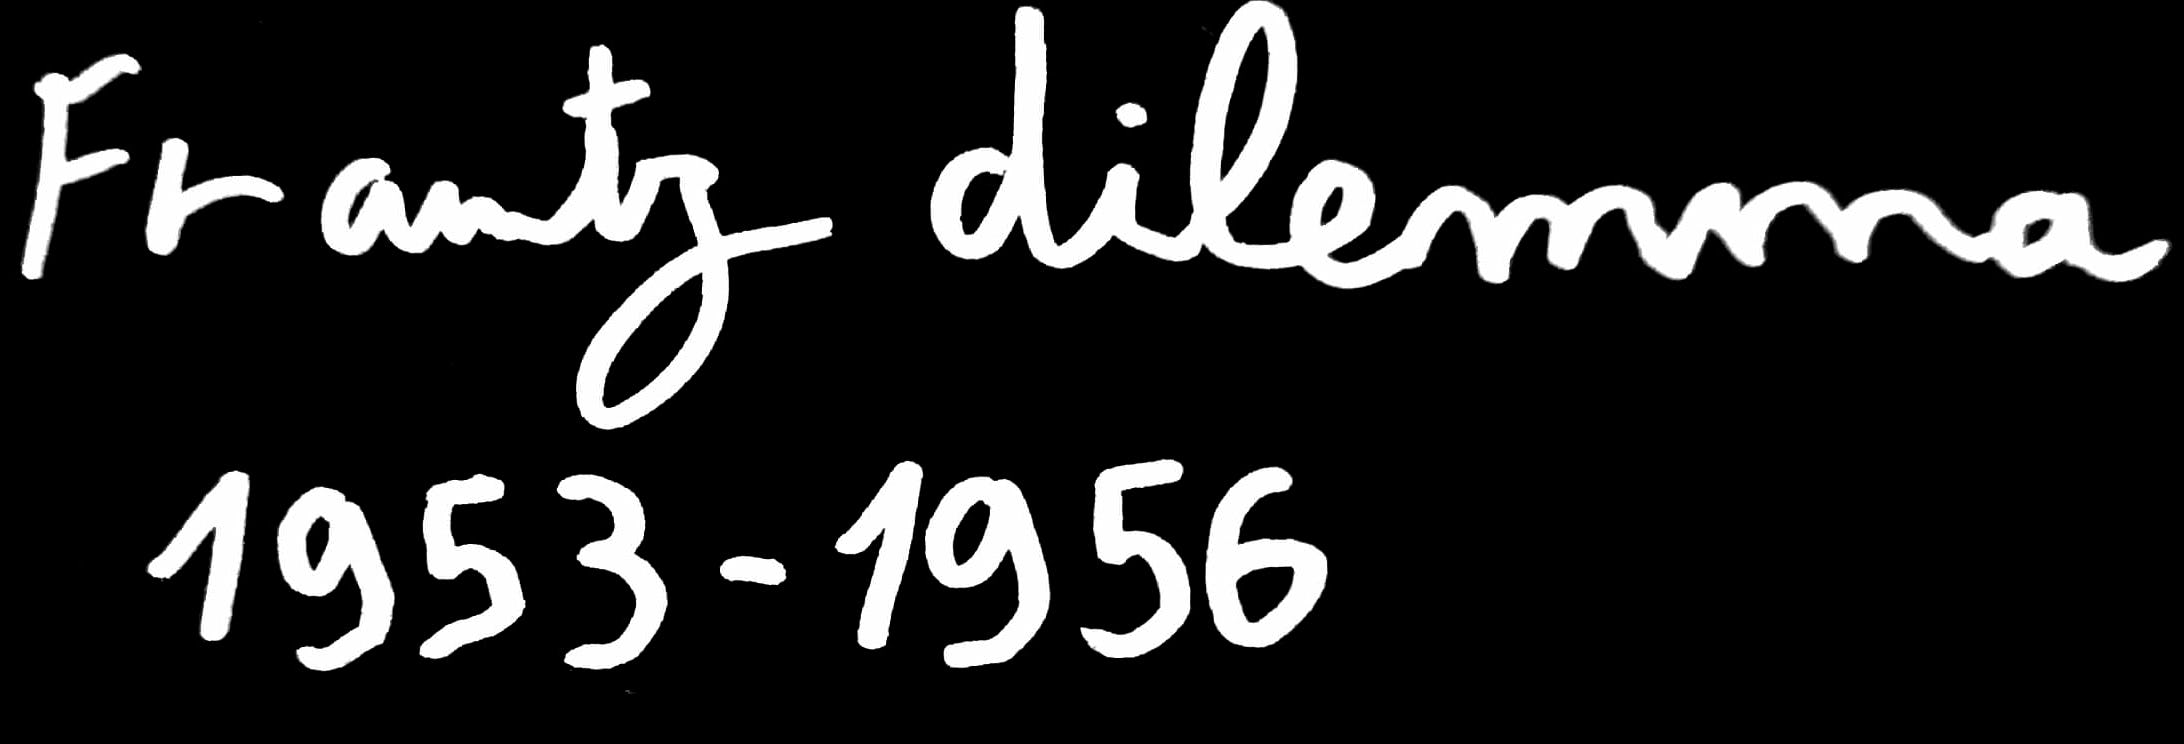 Handwritten text: Frantz Dilemma 1953-1956 © Issam Larkat